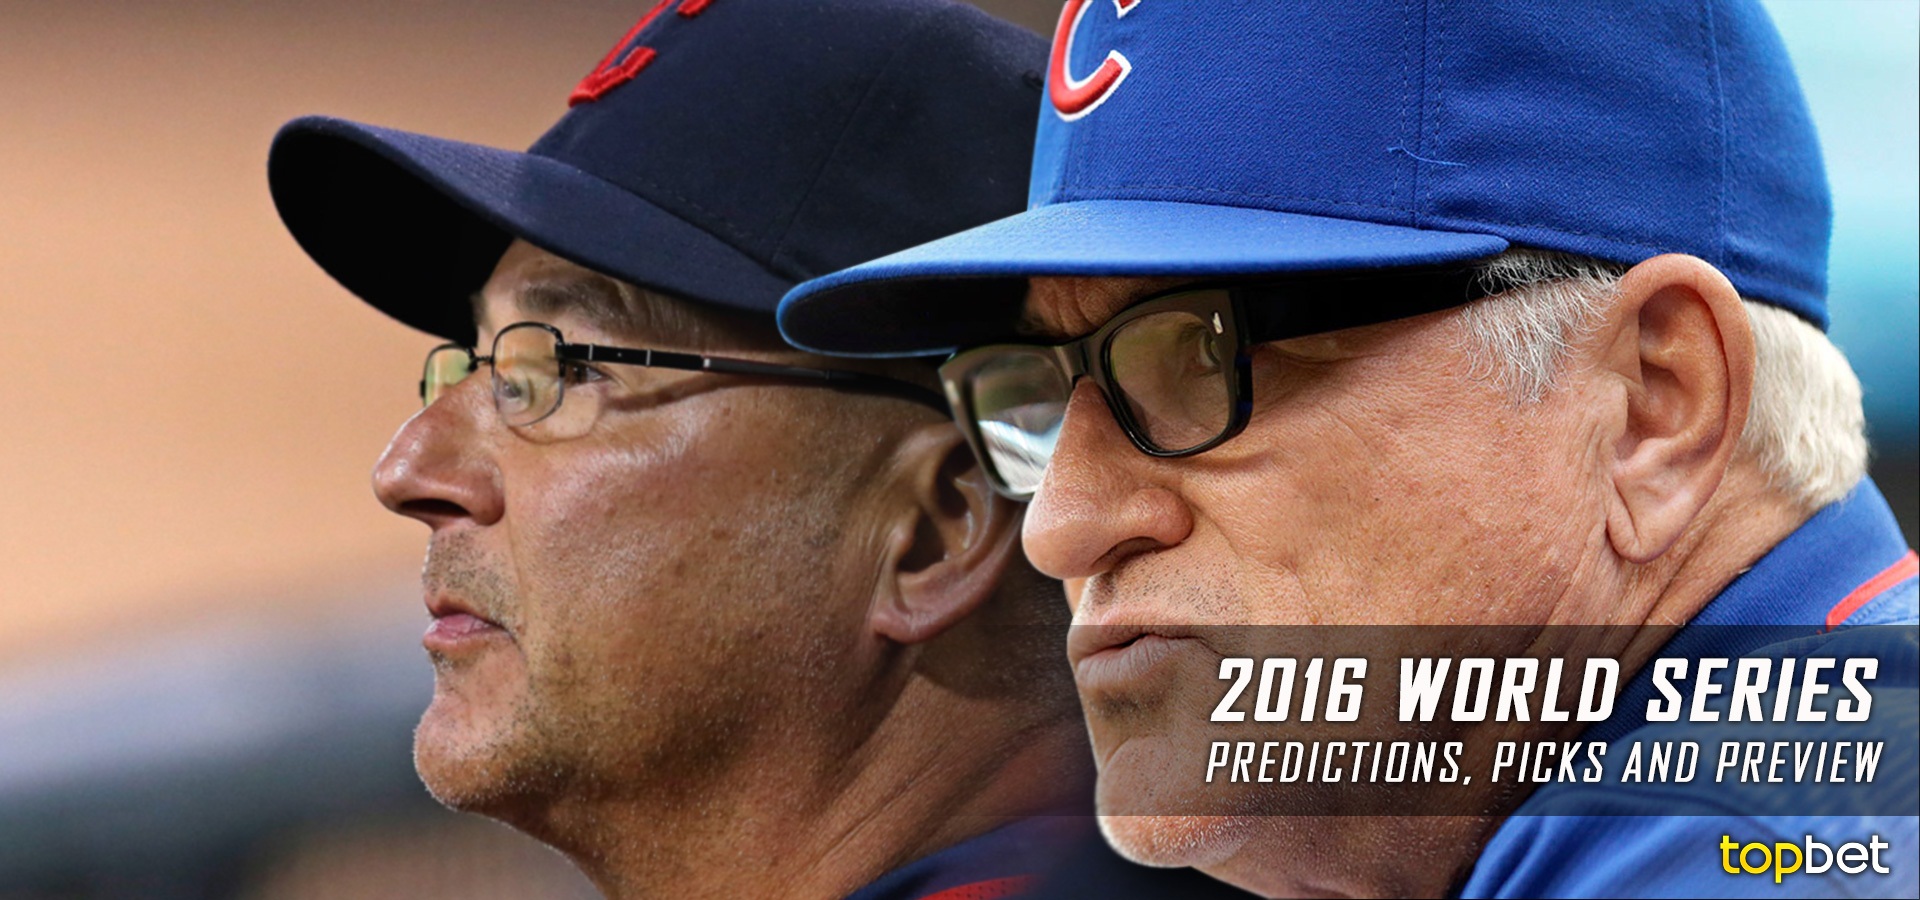 2016 MLB World Series Predictions, Picks and Preview